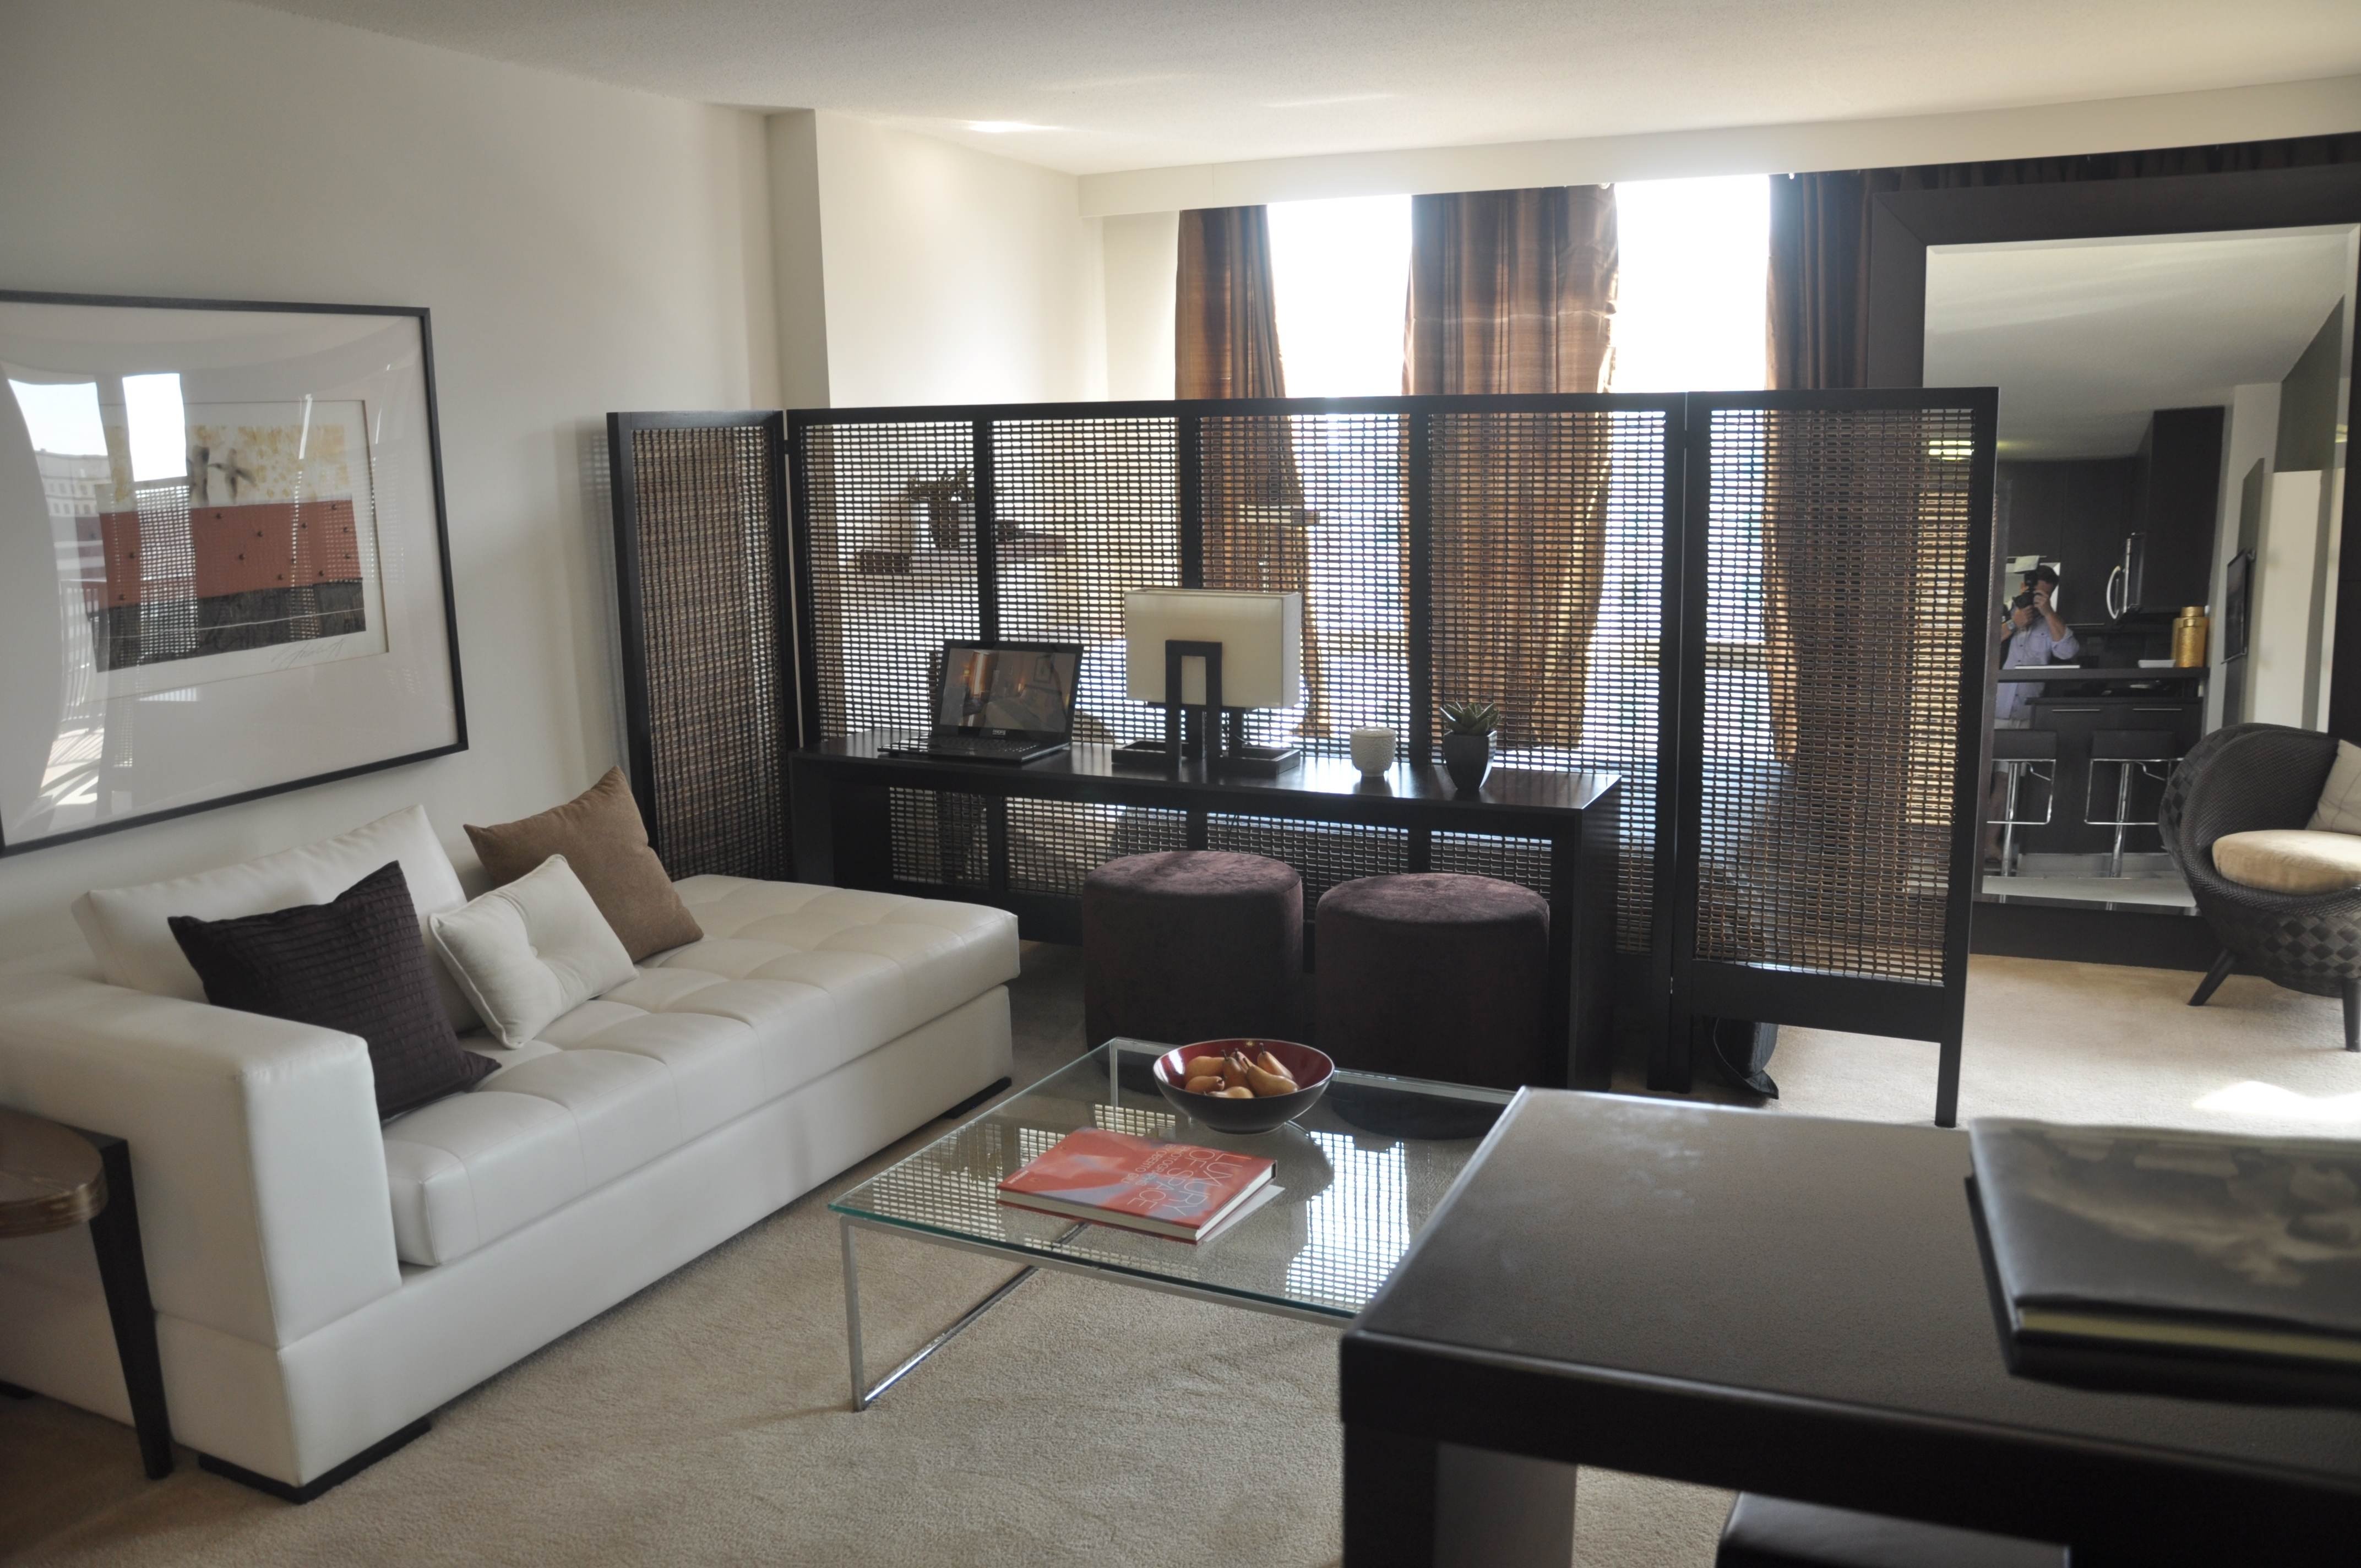 3 bedroom apartment furniture set